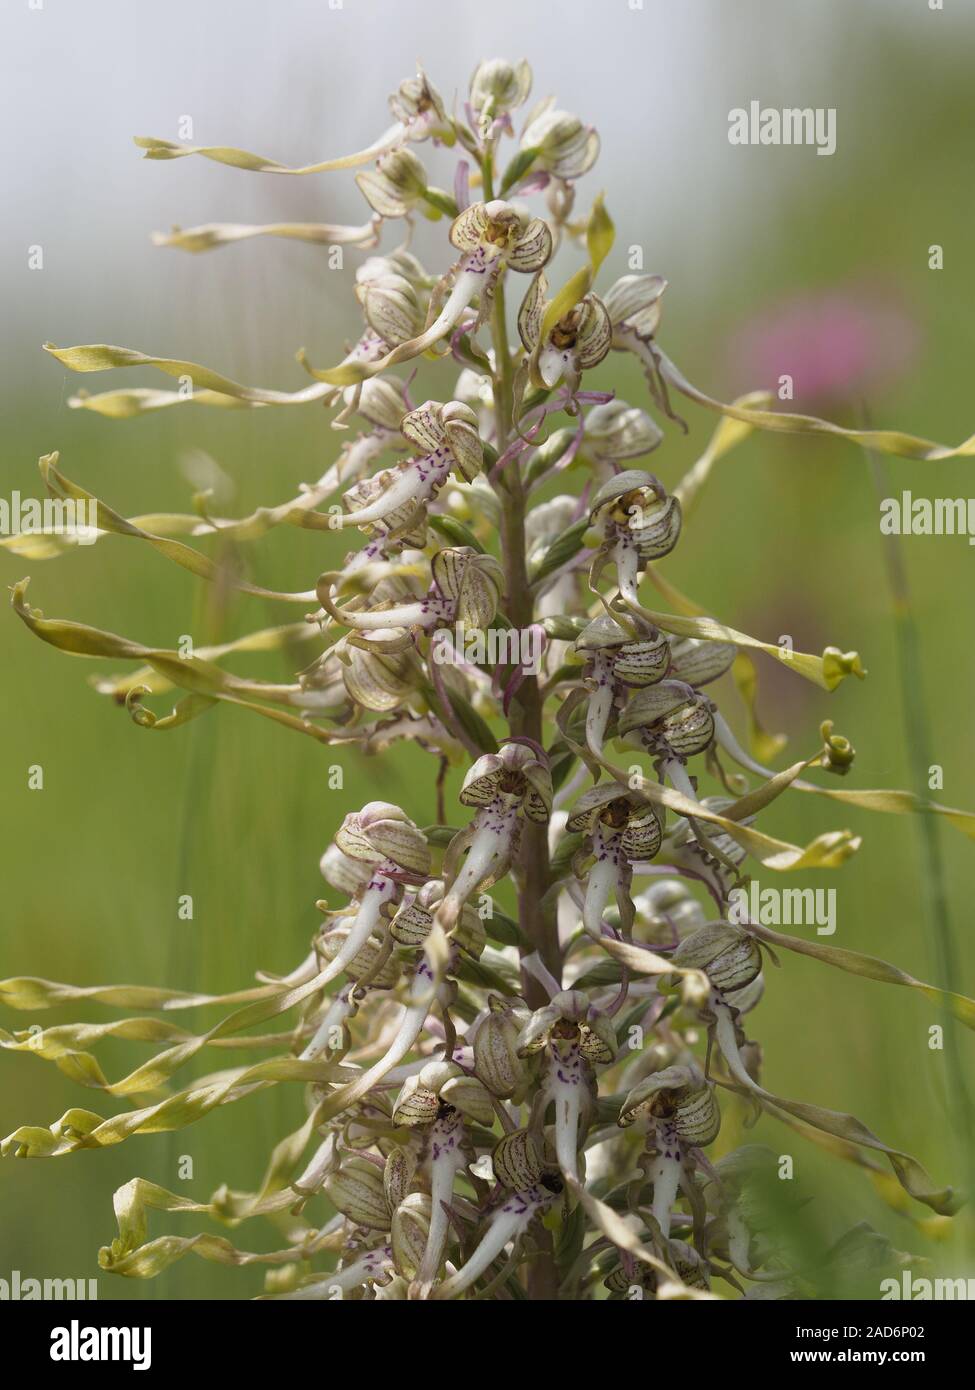 Bock's strap tongue,Orchiedeen,Himantoglossum hircinum, Stock Photo